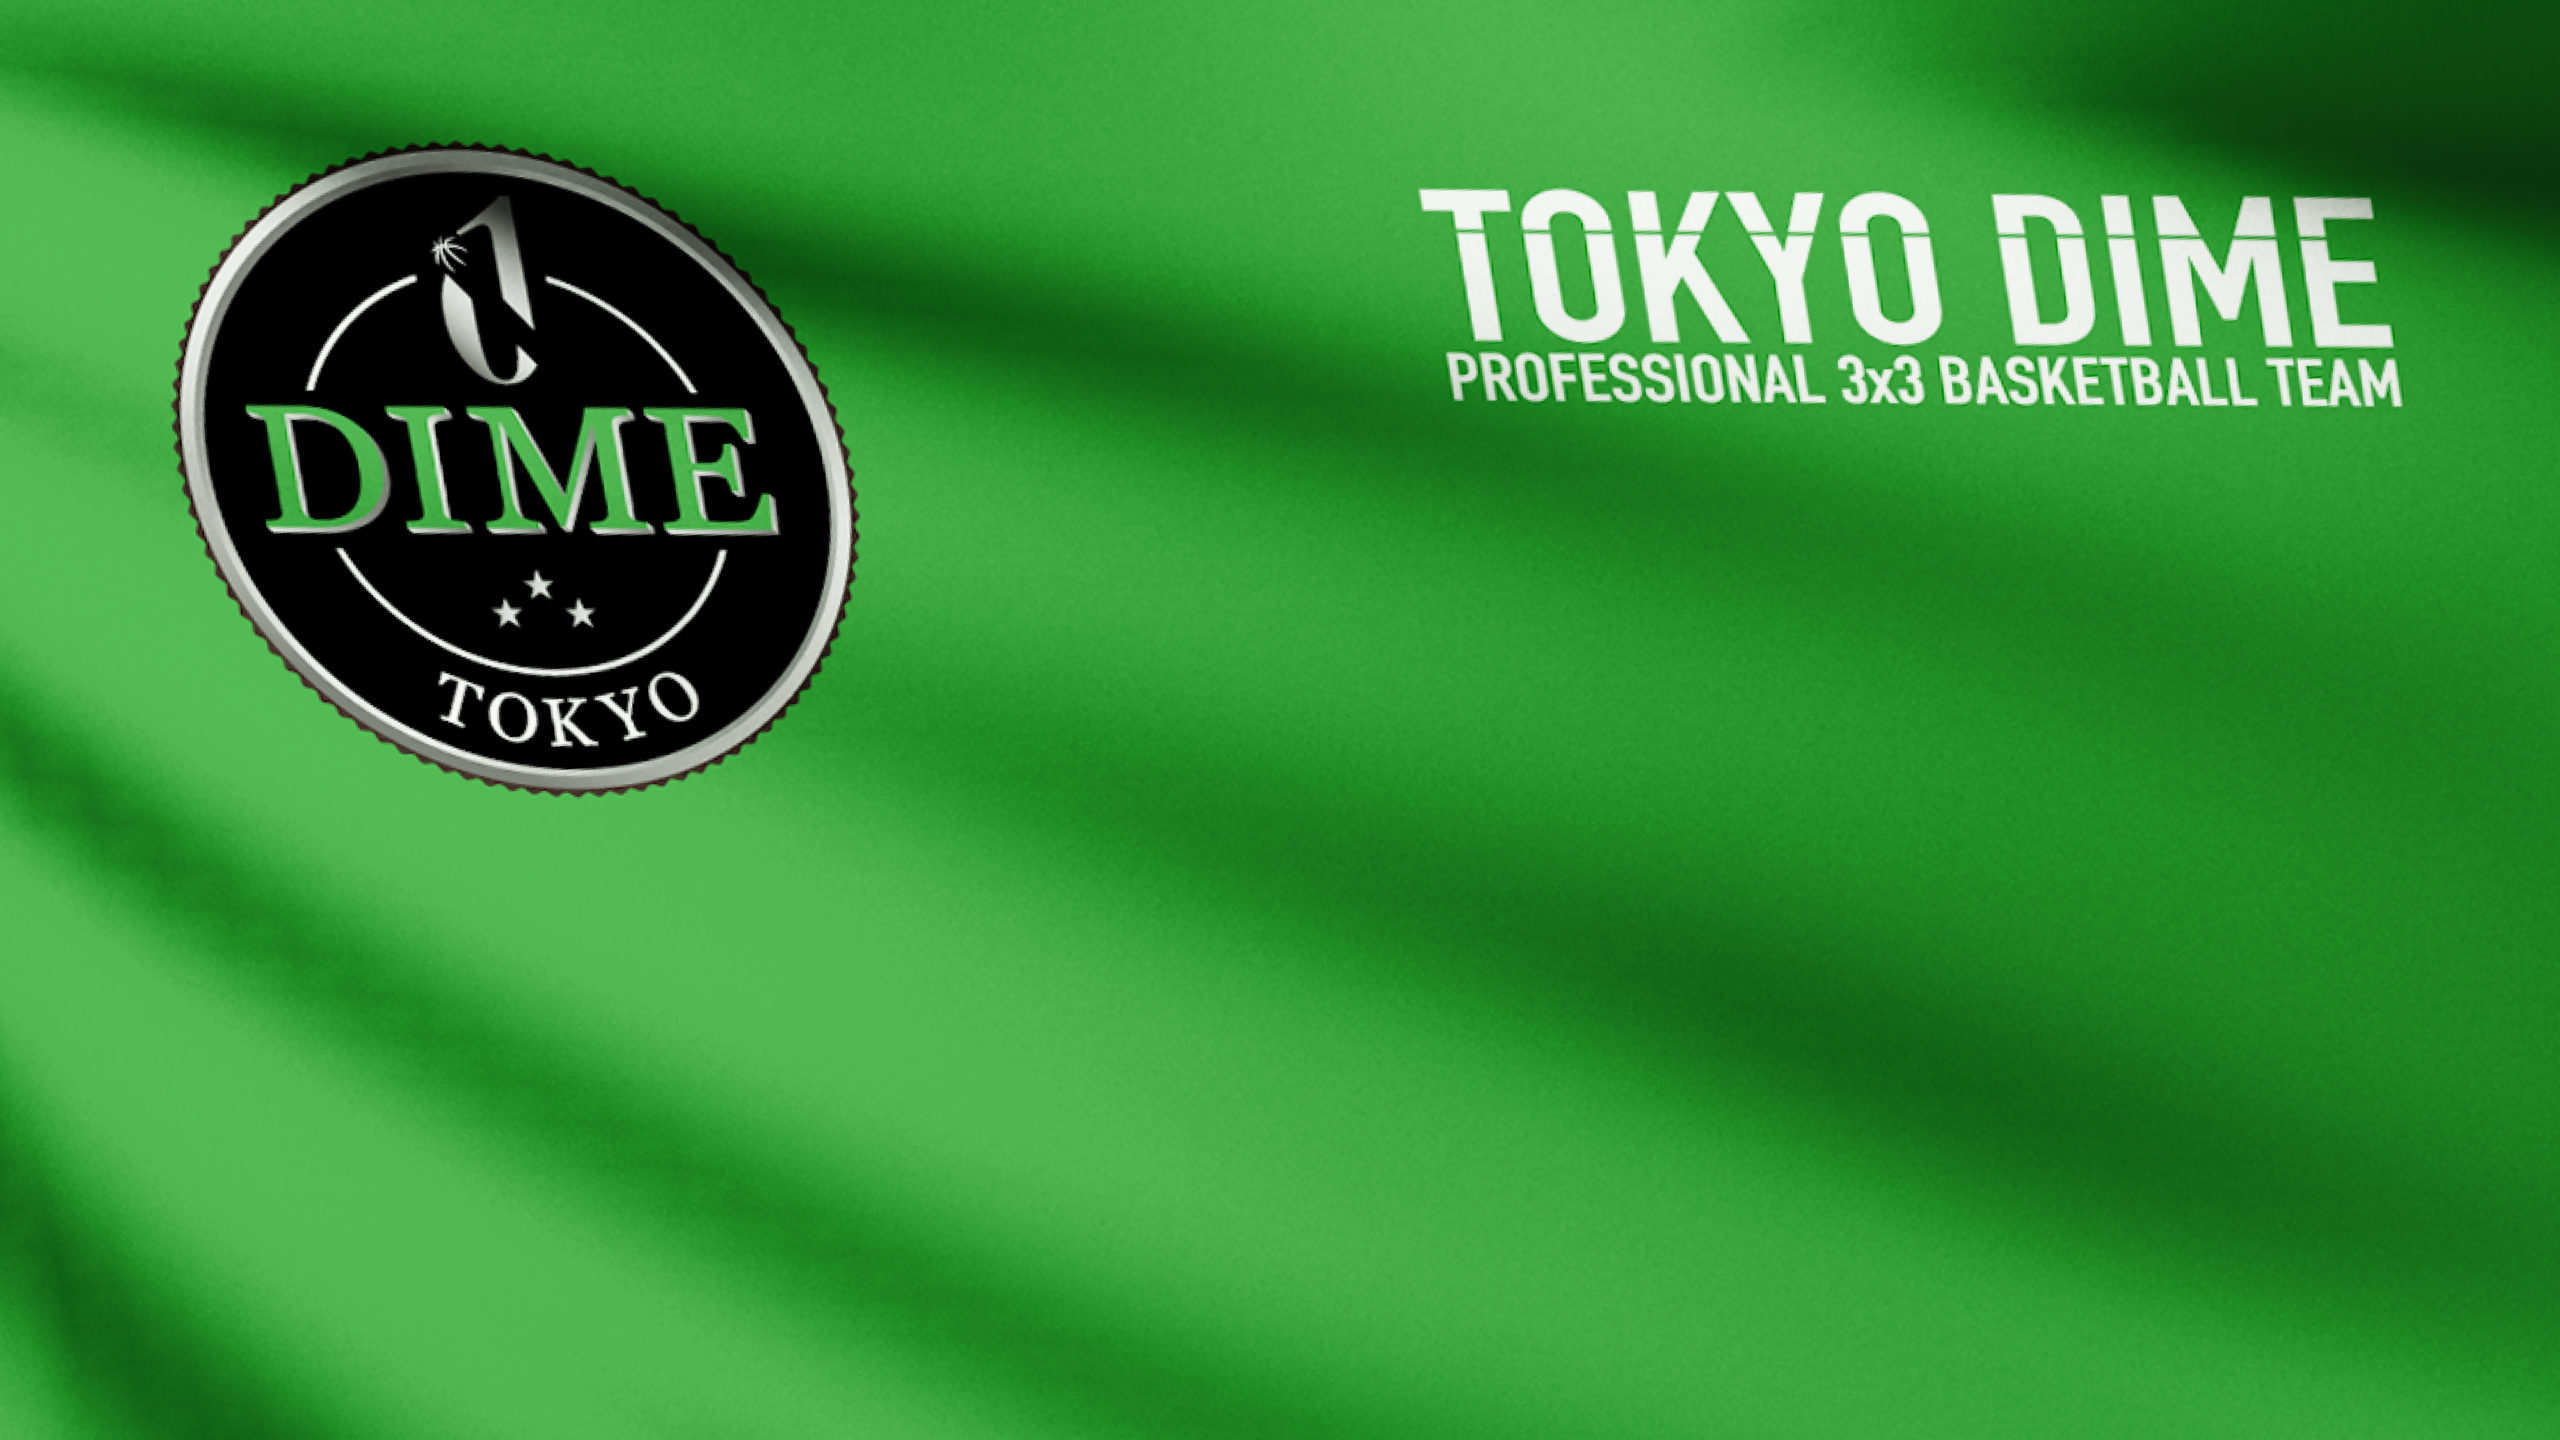 Tokyo Dimeオリジナルzoom背景できました Tokyo Dime 東京ダイム 公式ウェブサイト Professional 3x3 Basketball Team